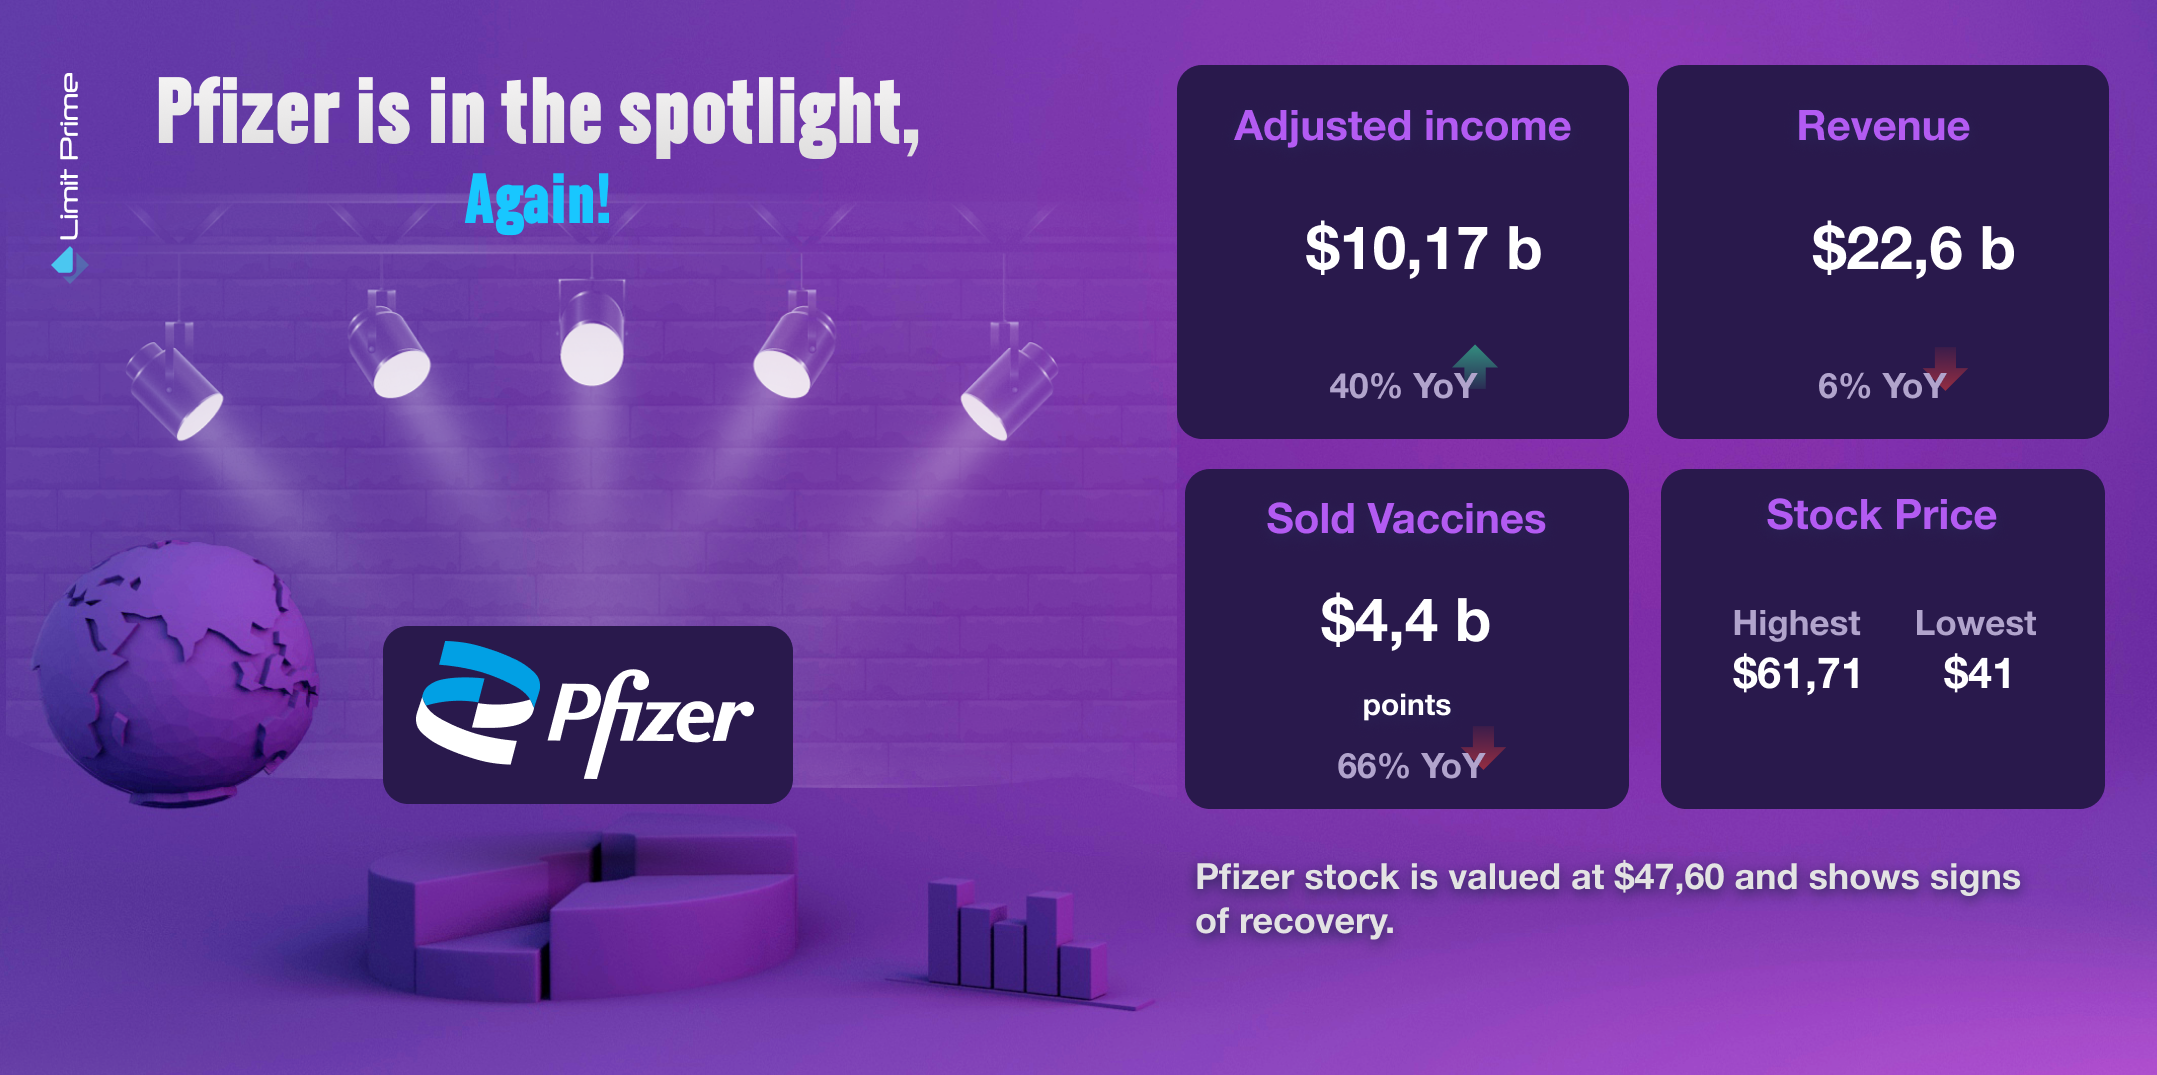 Pfizer is in the spotlight, again!